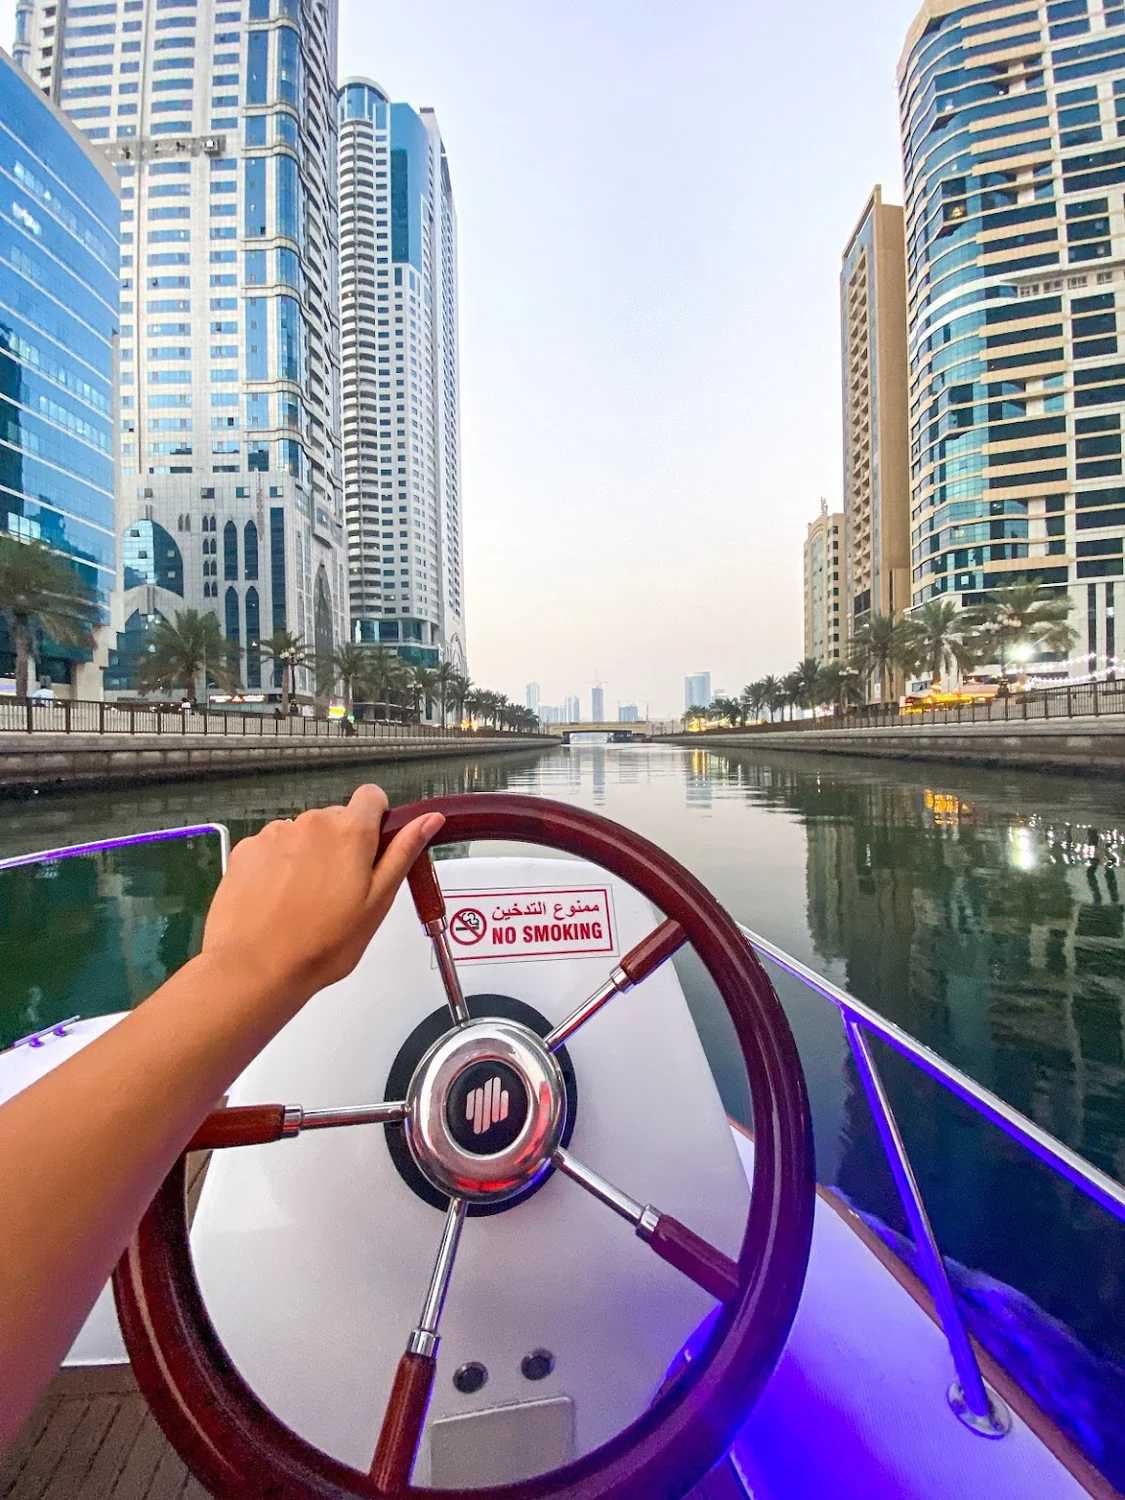 Top 5 Boating Activities in UAE - Self drive water boats - FunWorld Boats located in Al Majaz Waterfront Sharjah